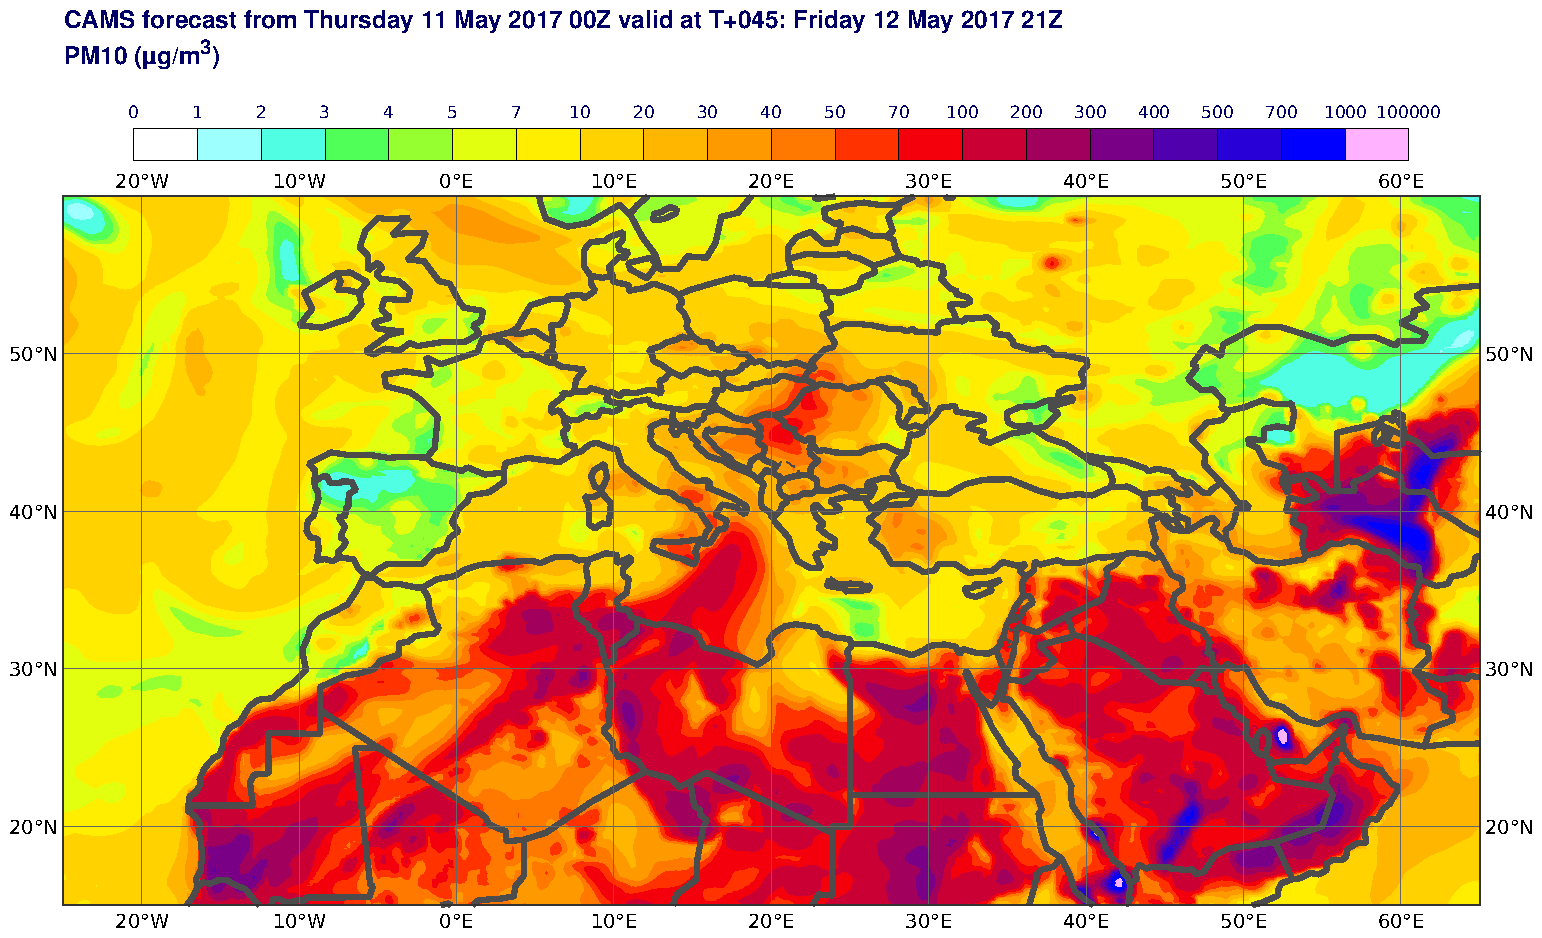 PM10 (μg/m3) valid at T45 - 2017-05-12 21:00